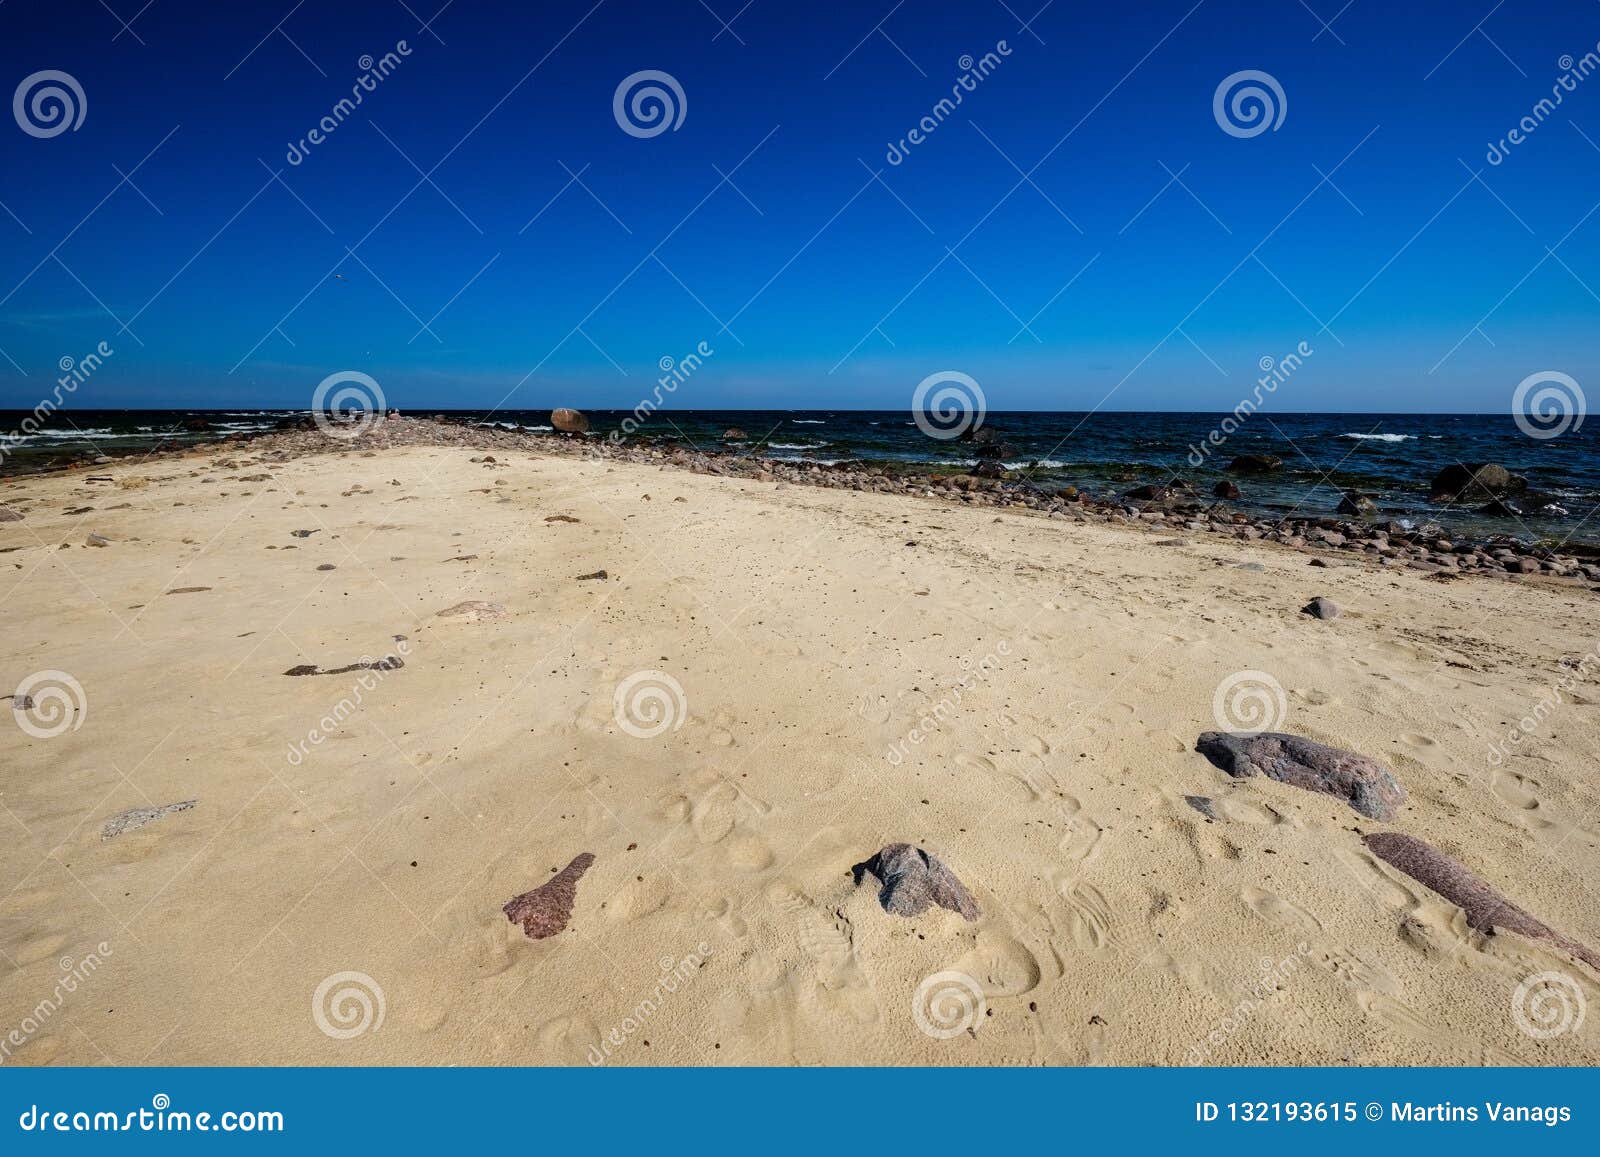 Panoramic Sea Beach View in Summer Stock Image - Image of beach, winter ...